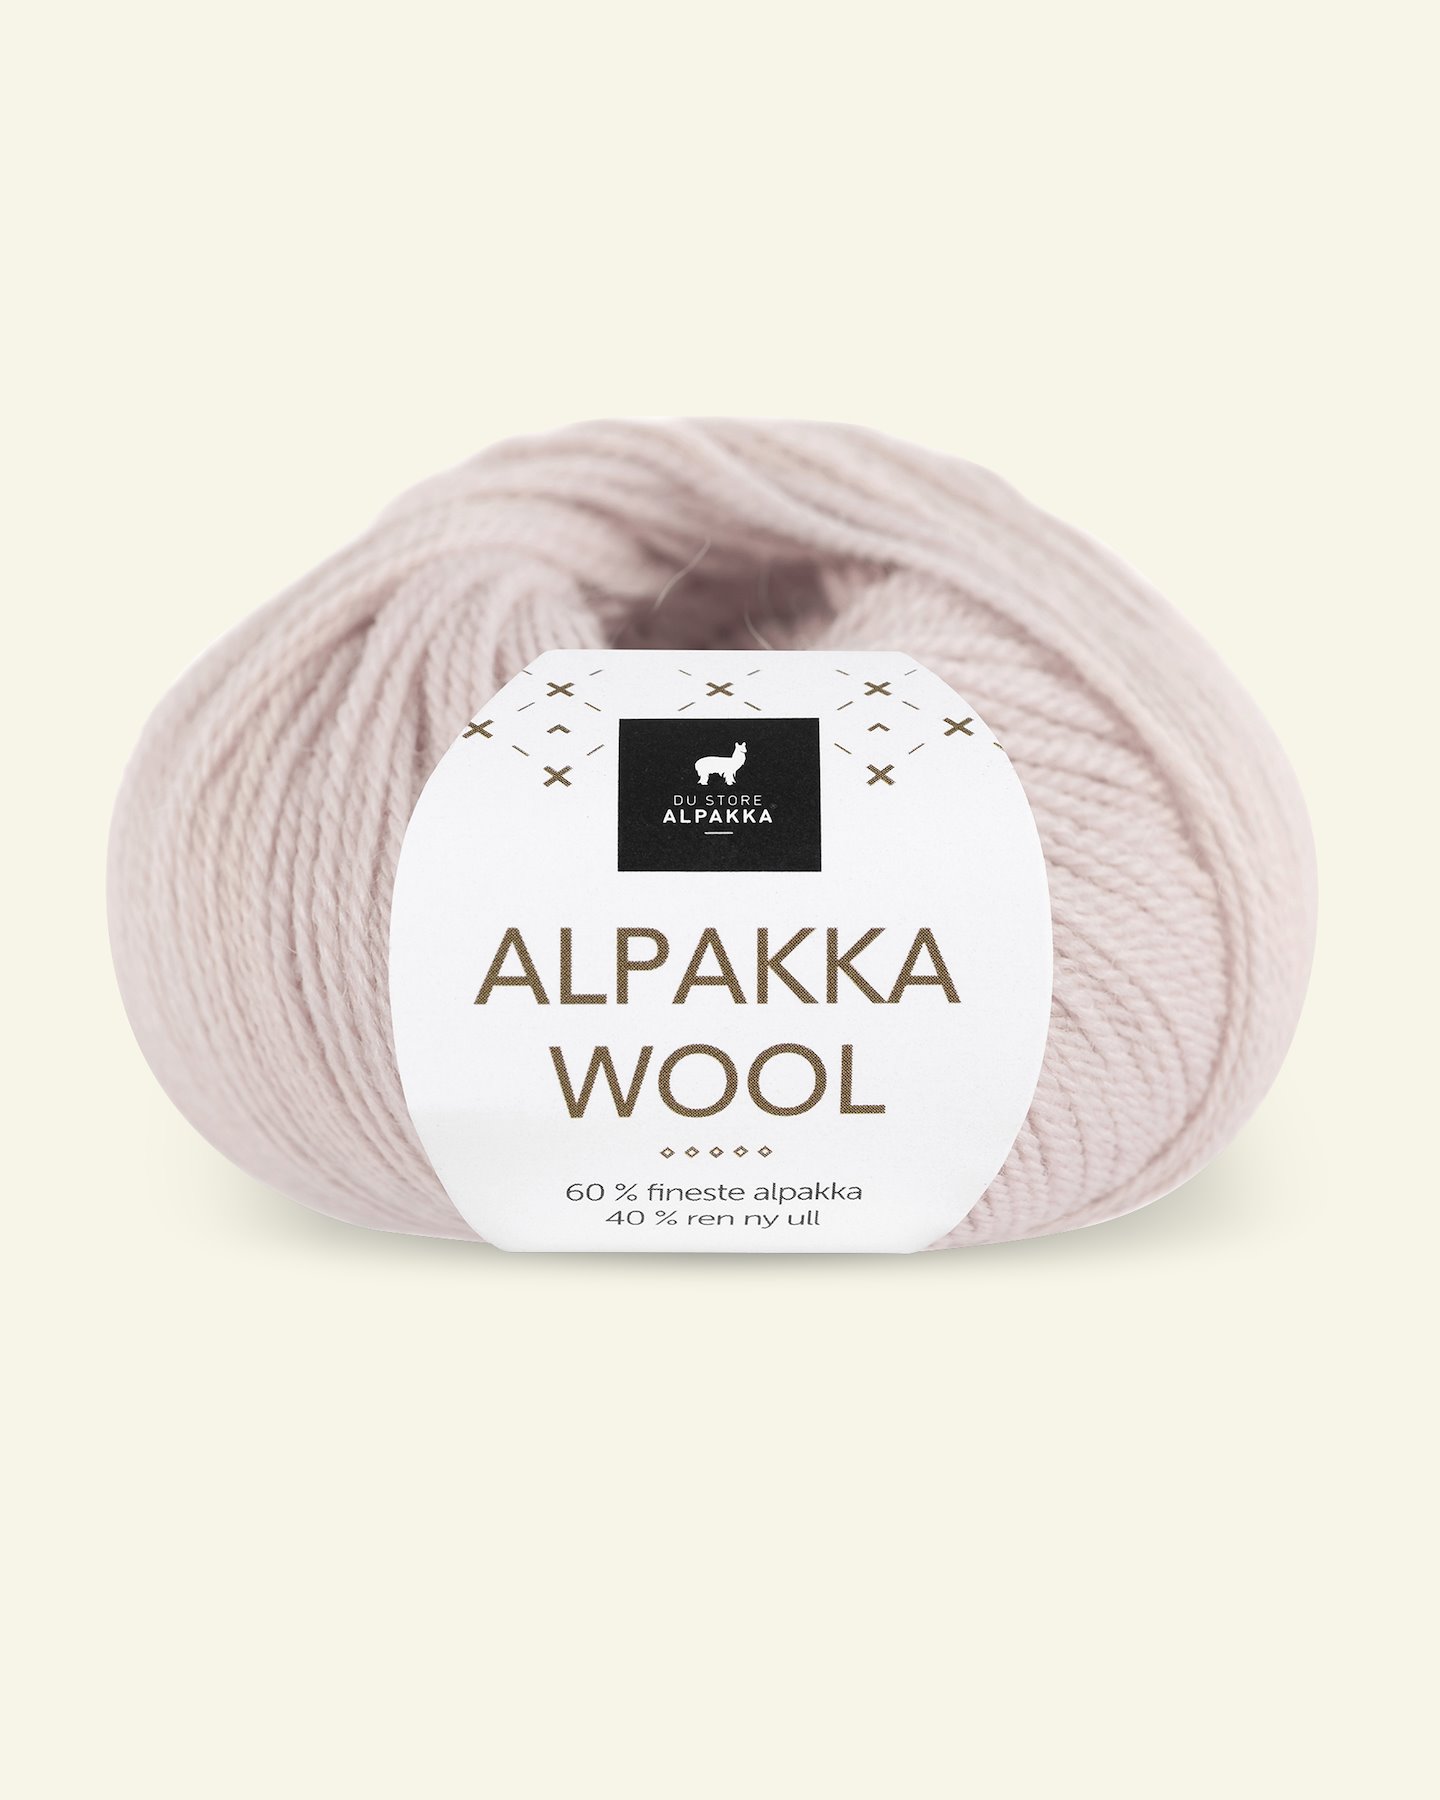 Du Store Alpakka, Alpaka Wolle "Alpakka Wool", leichtes rot (556) 90000573_pack